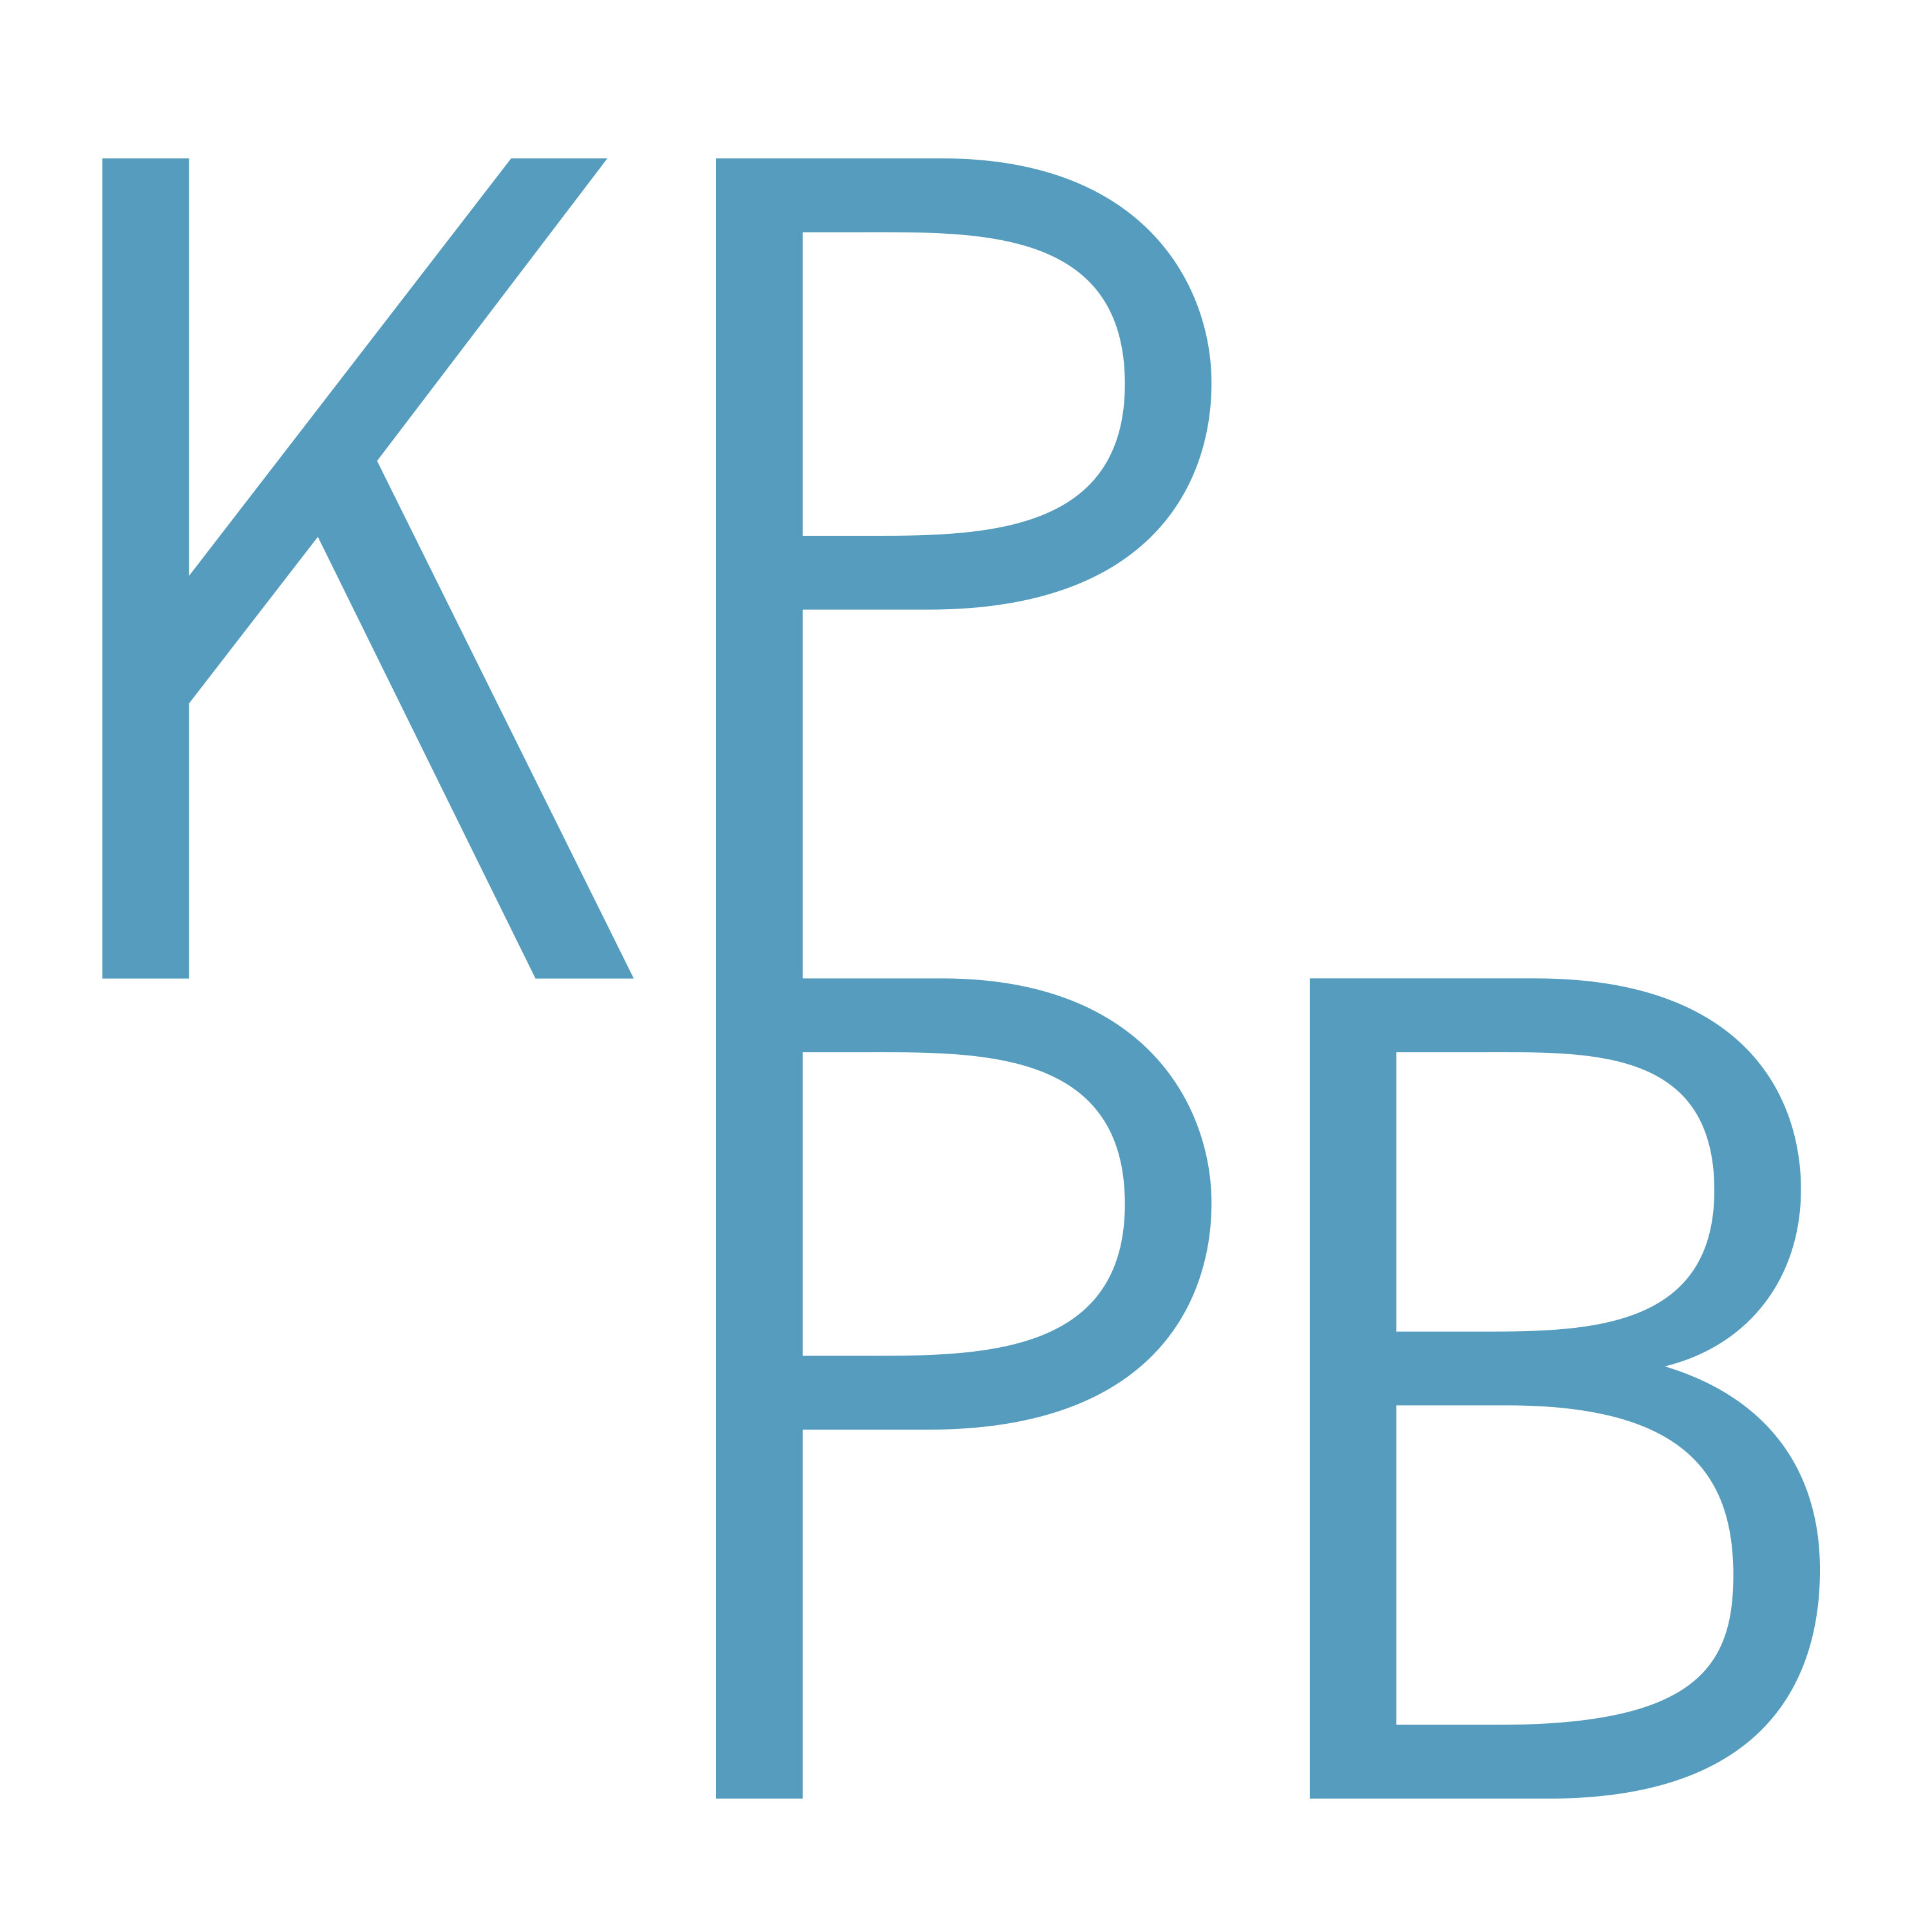 kppb logo